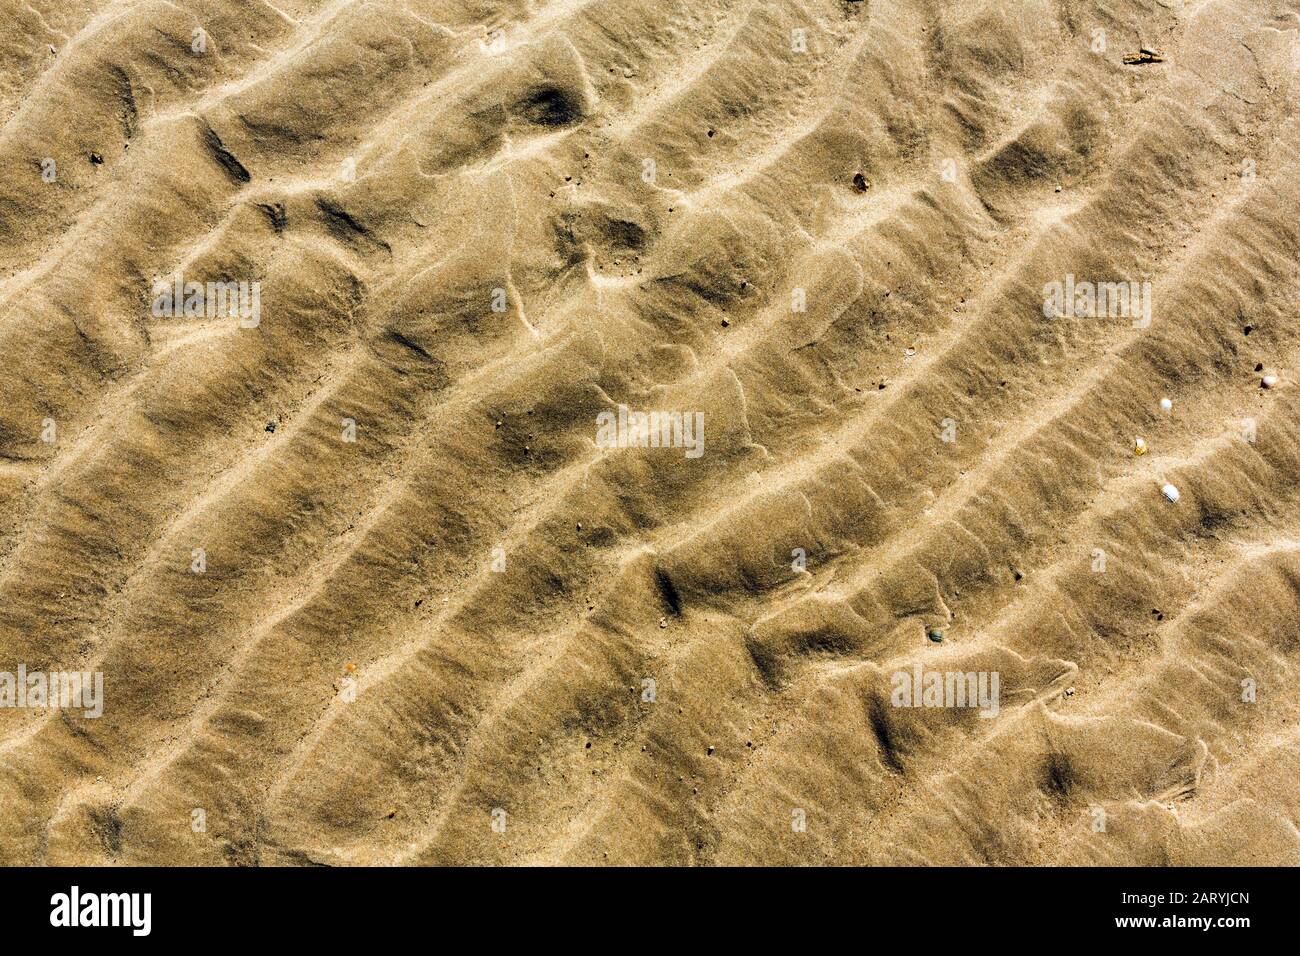 Sand ripple formation on a beach Stock Photo